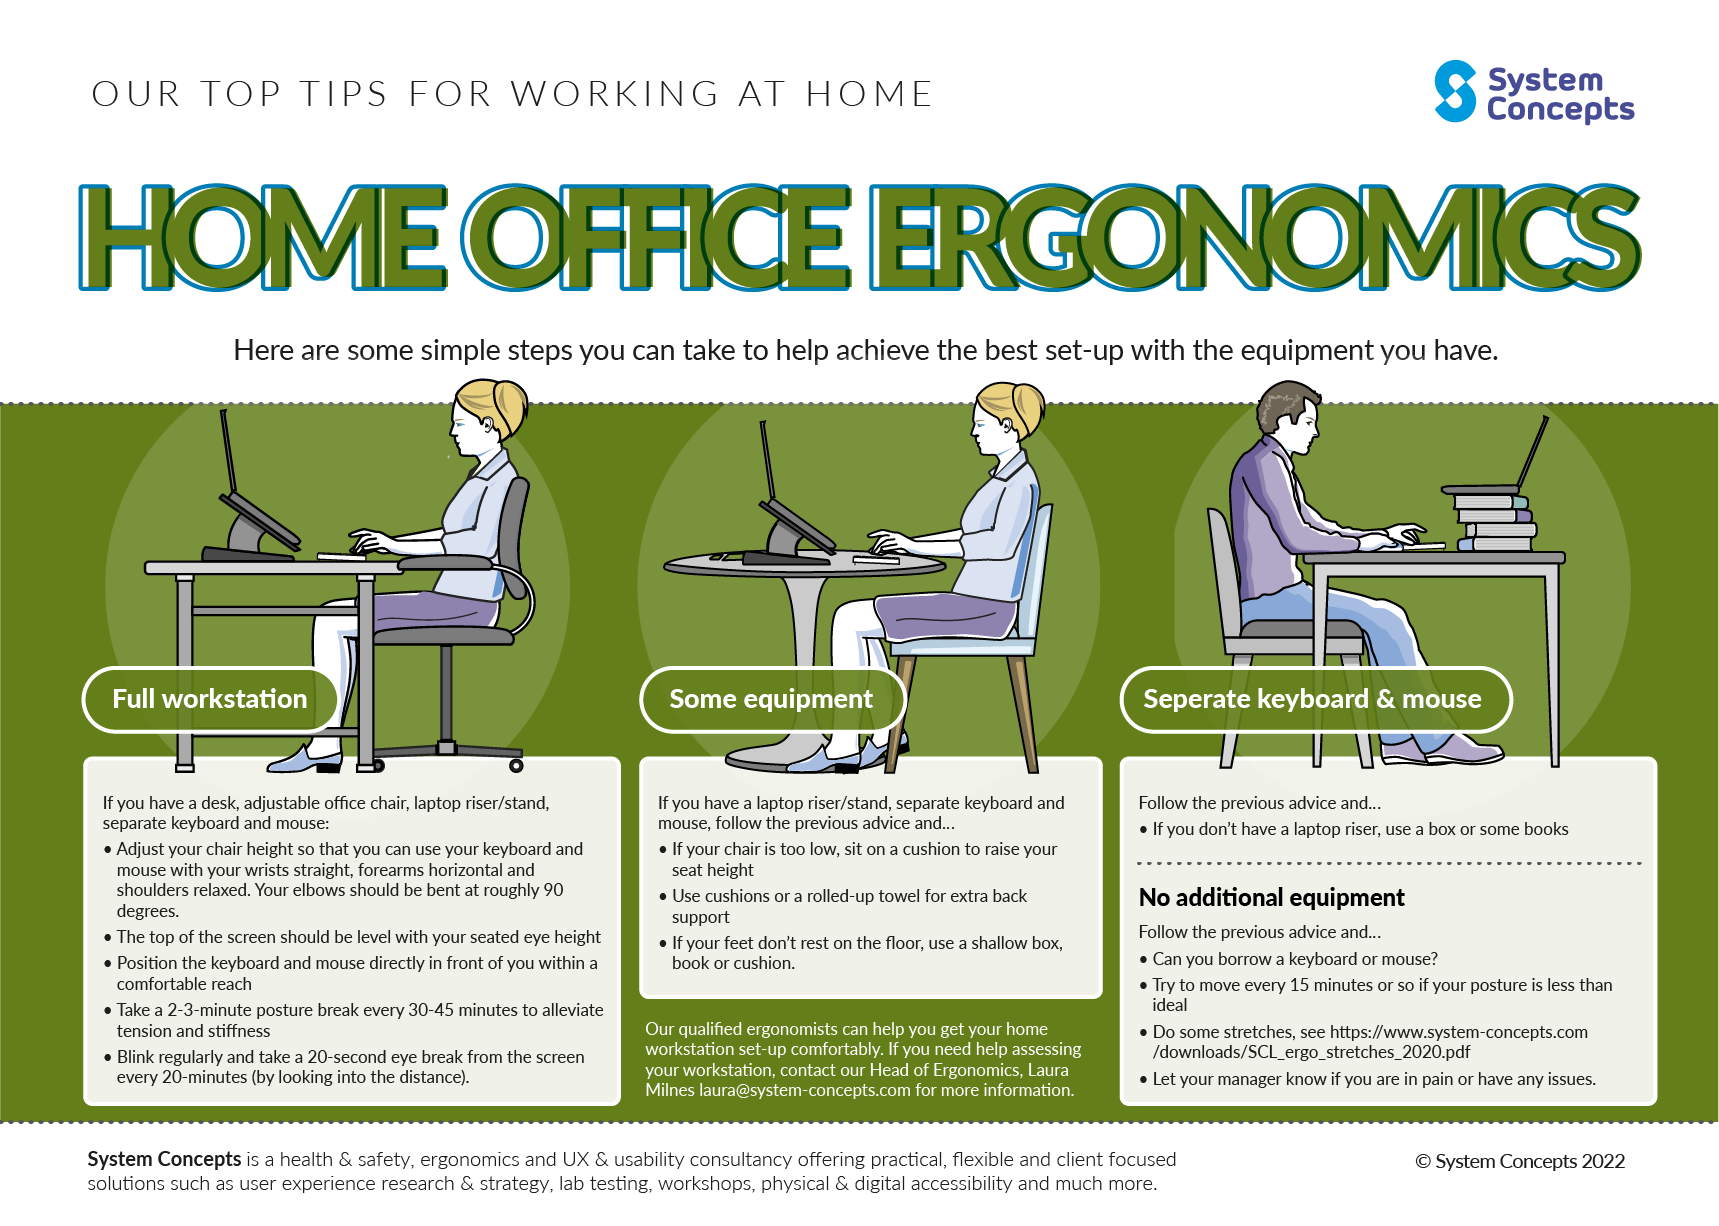 Home office ergonomics